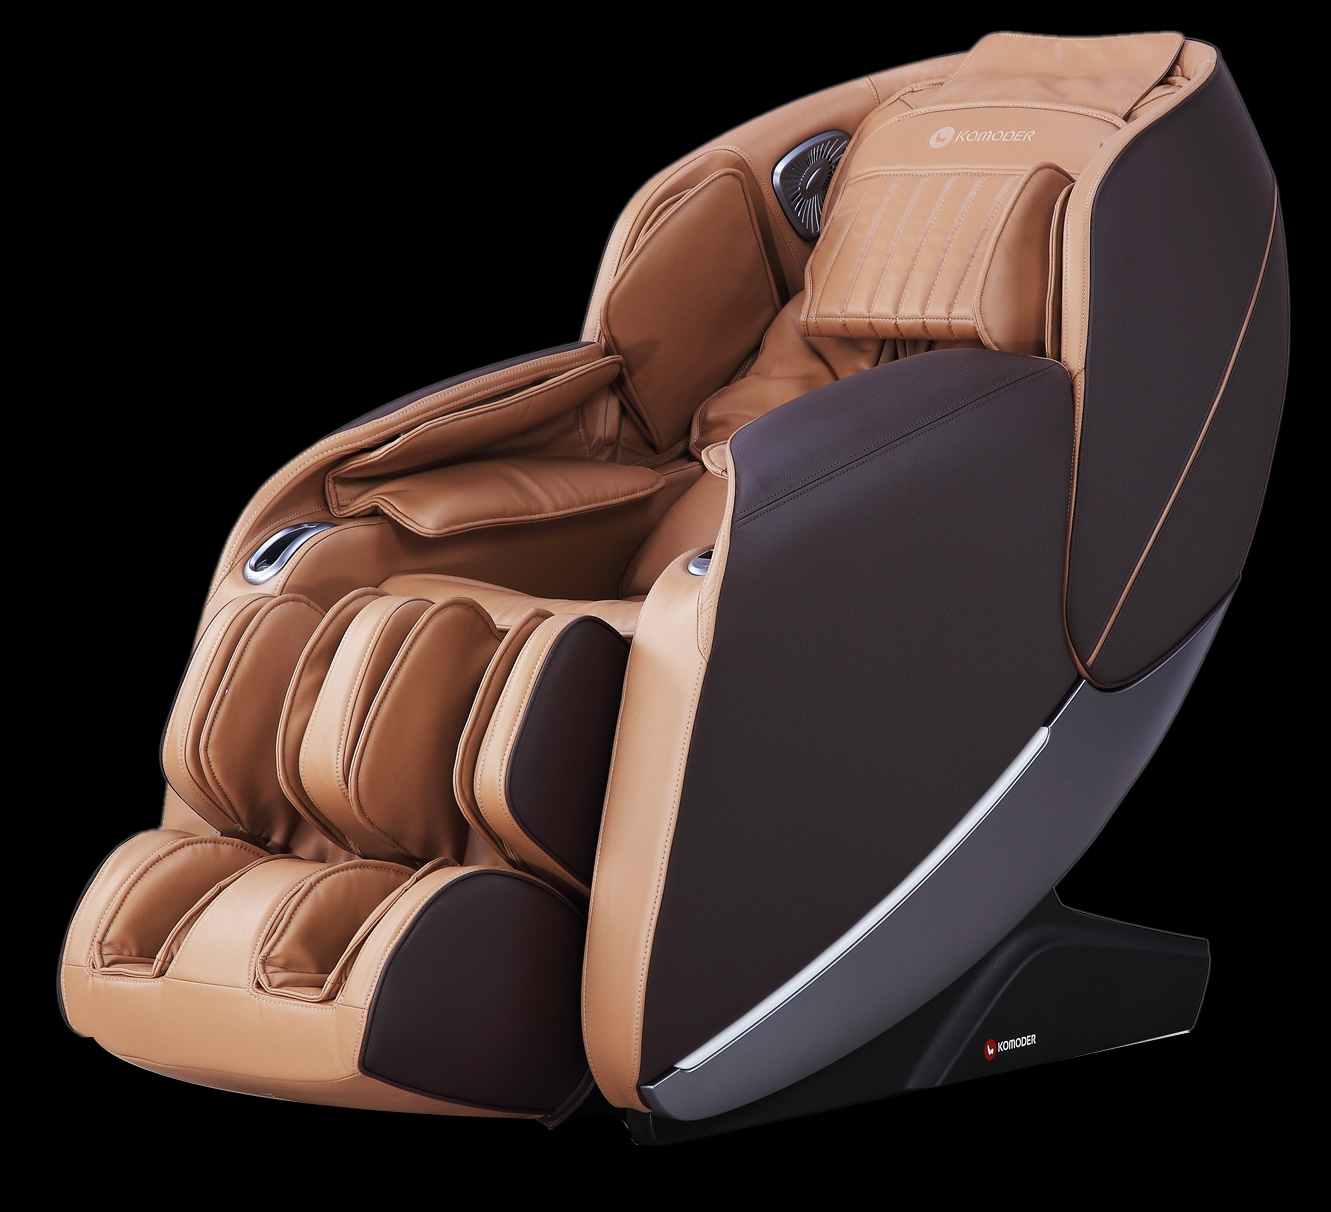 MONACO Massage Chair